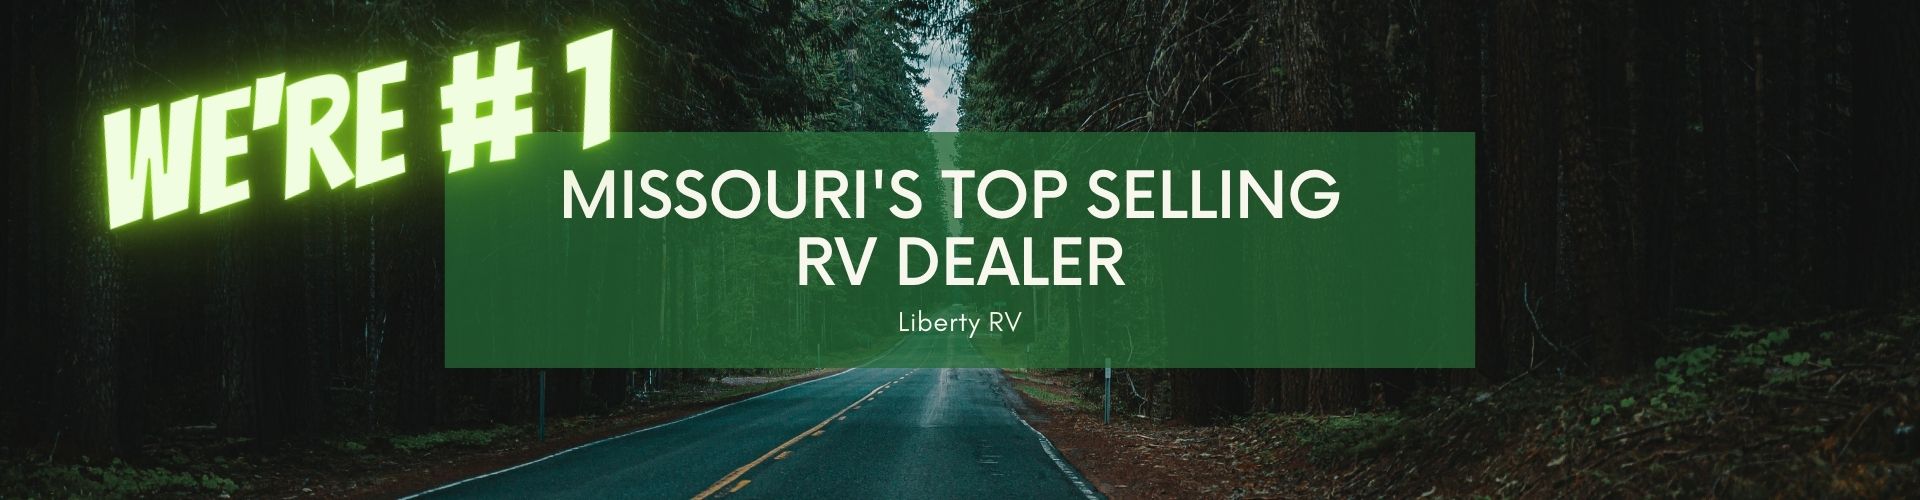 We're #1 Missouri's Top Selling RV Dealer